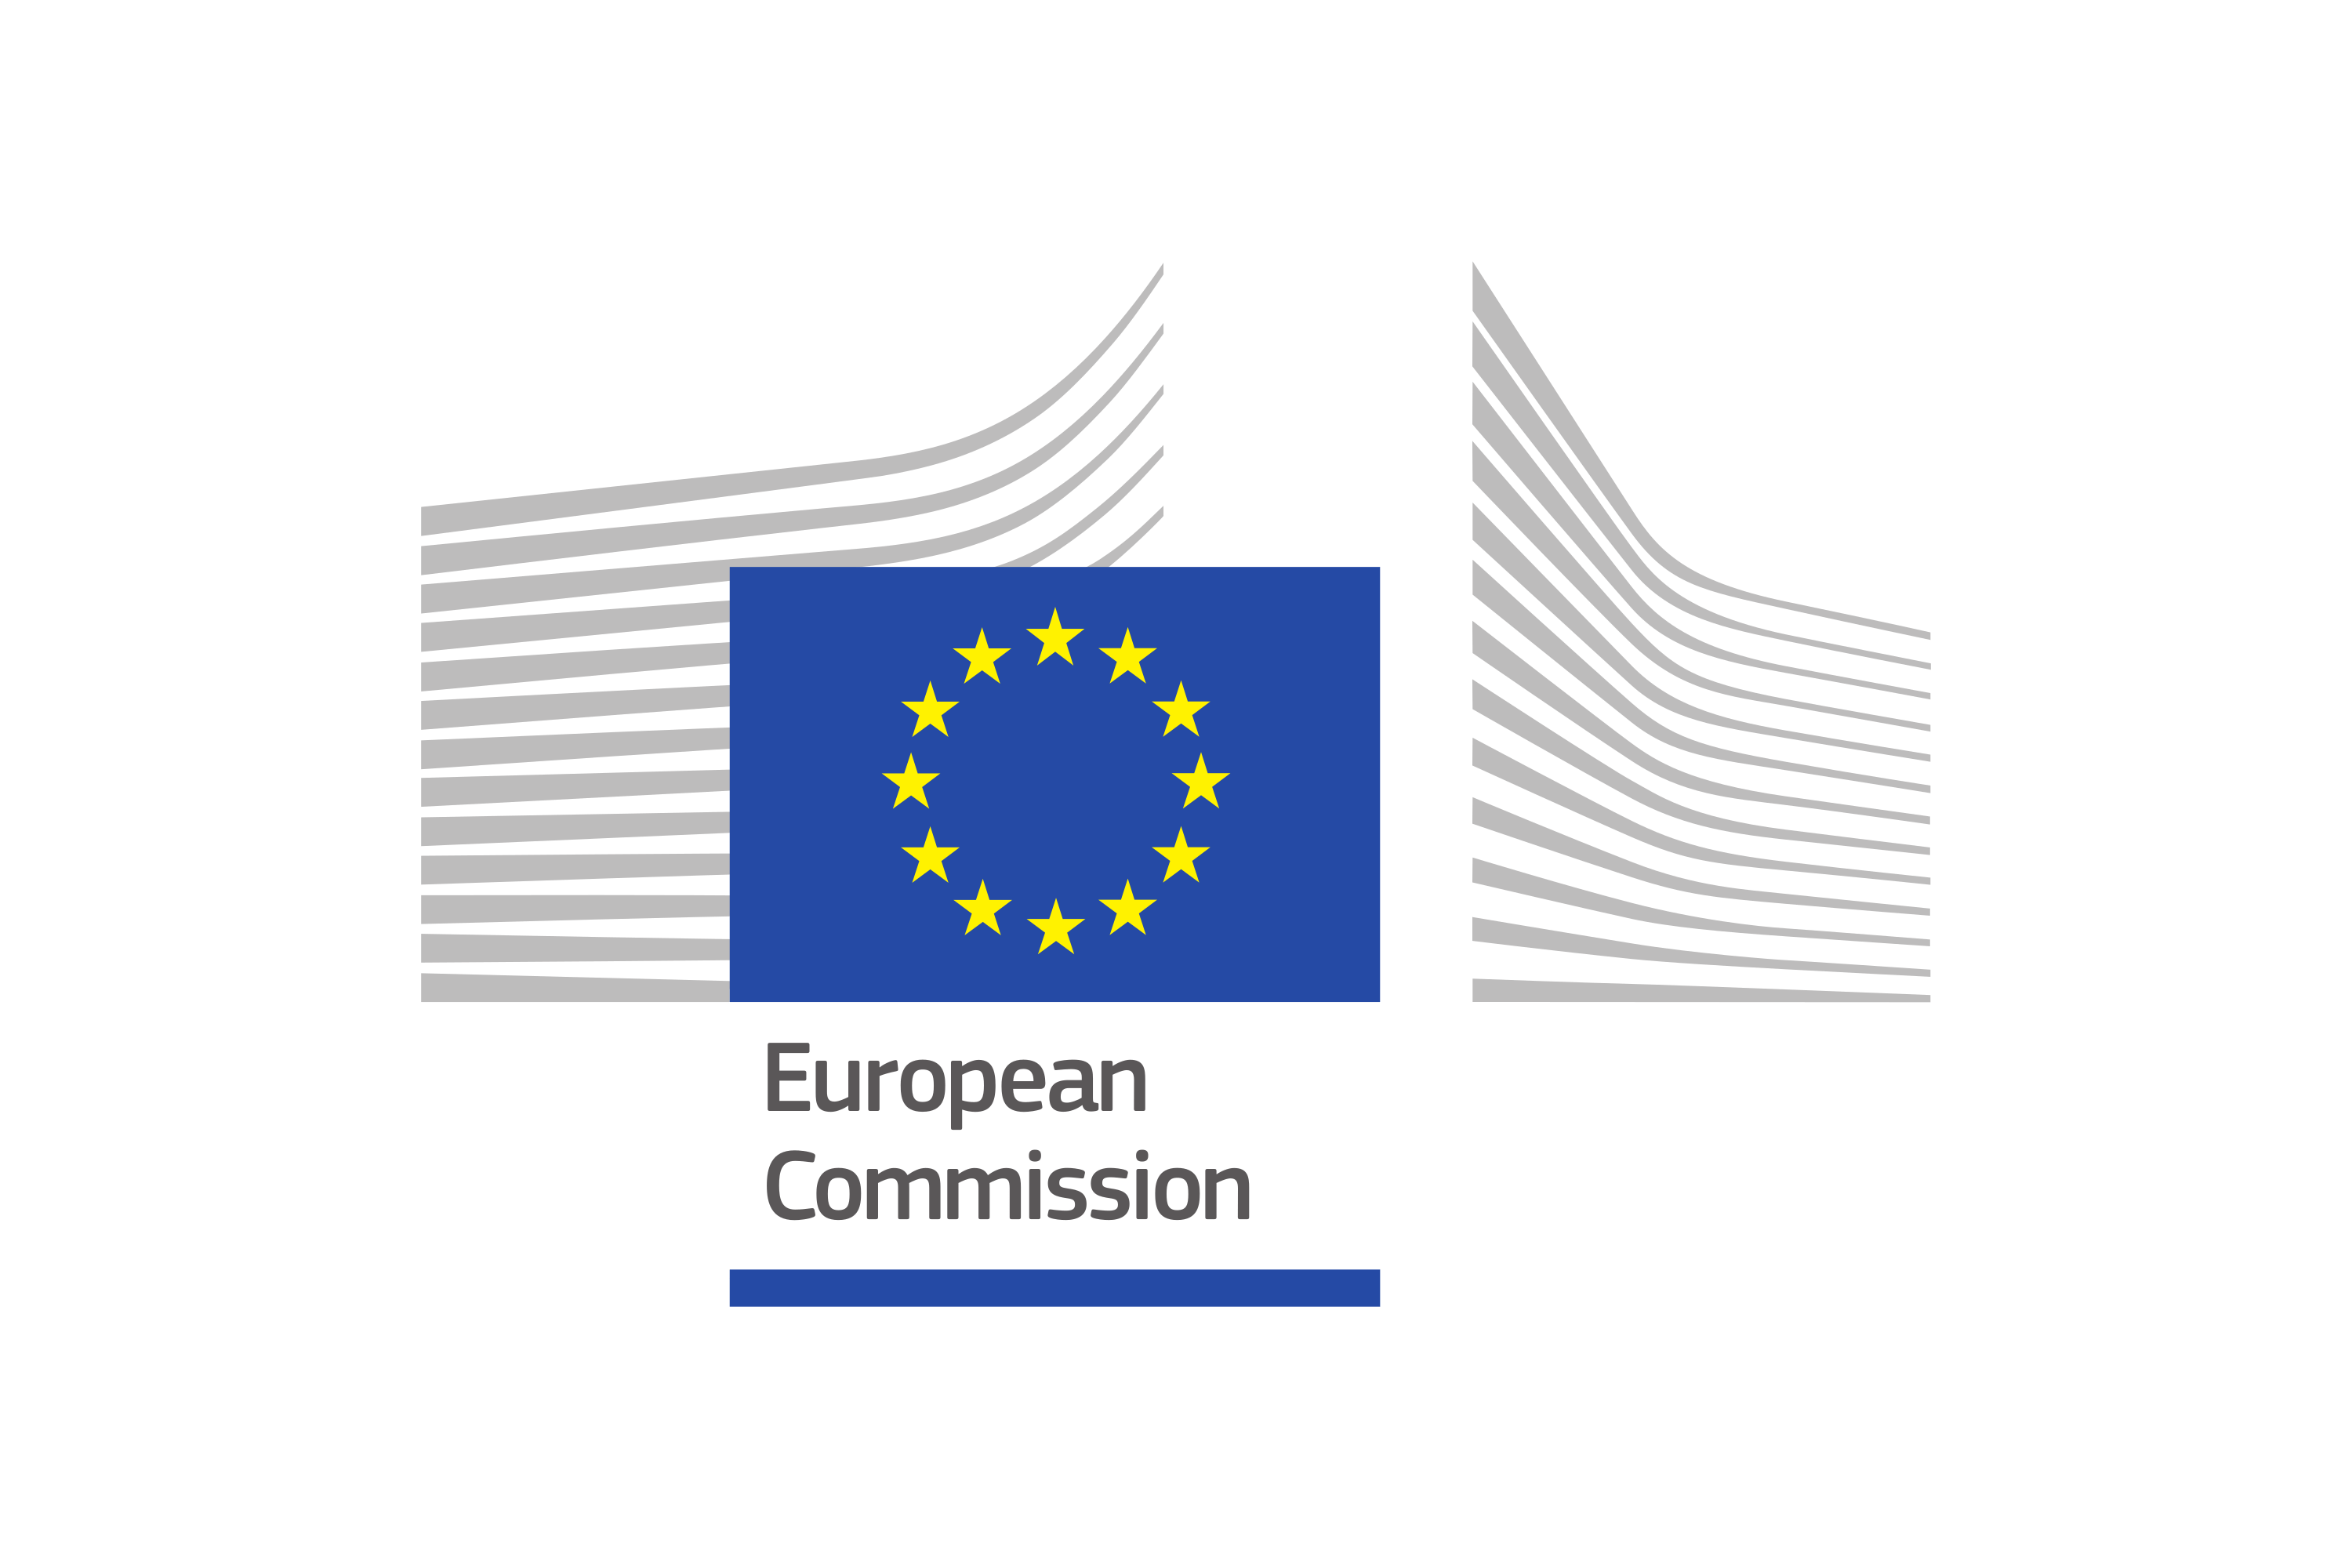 EU commission logo